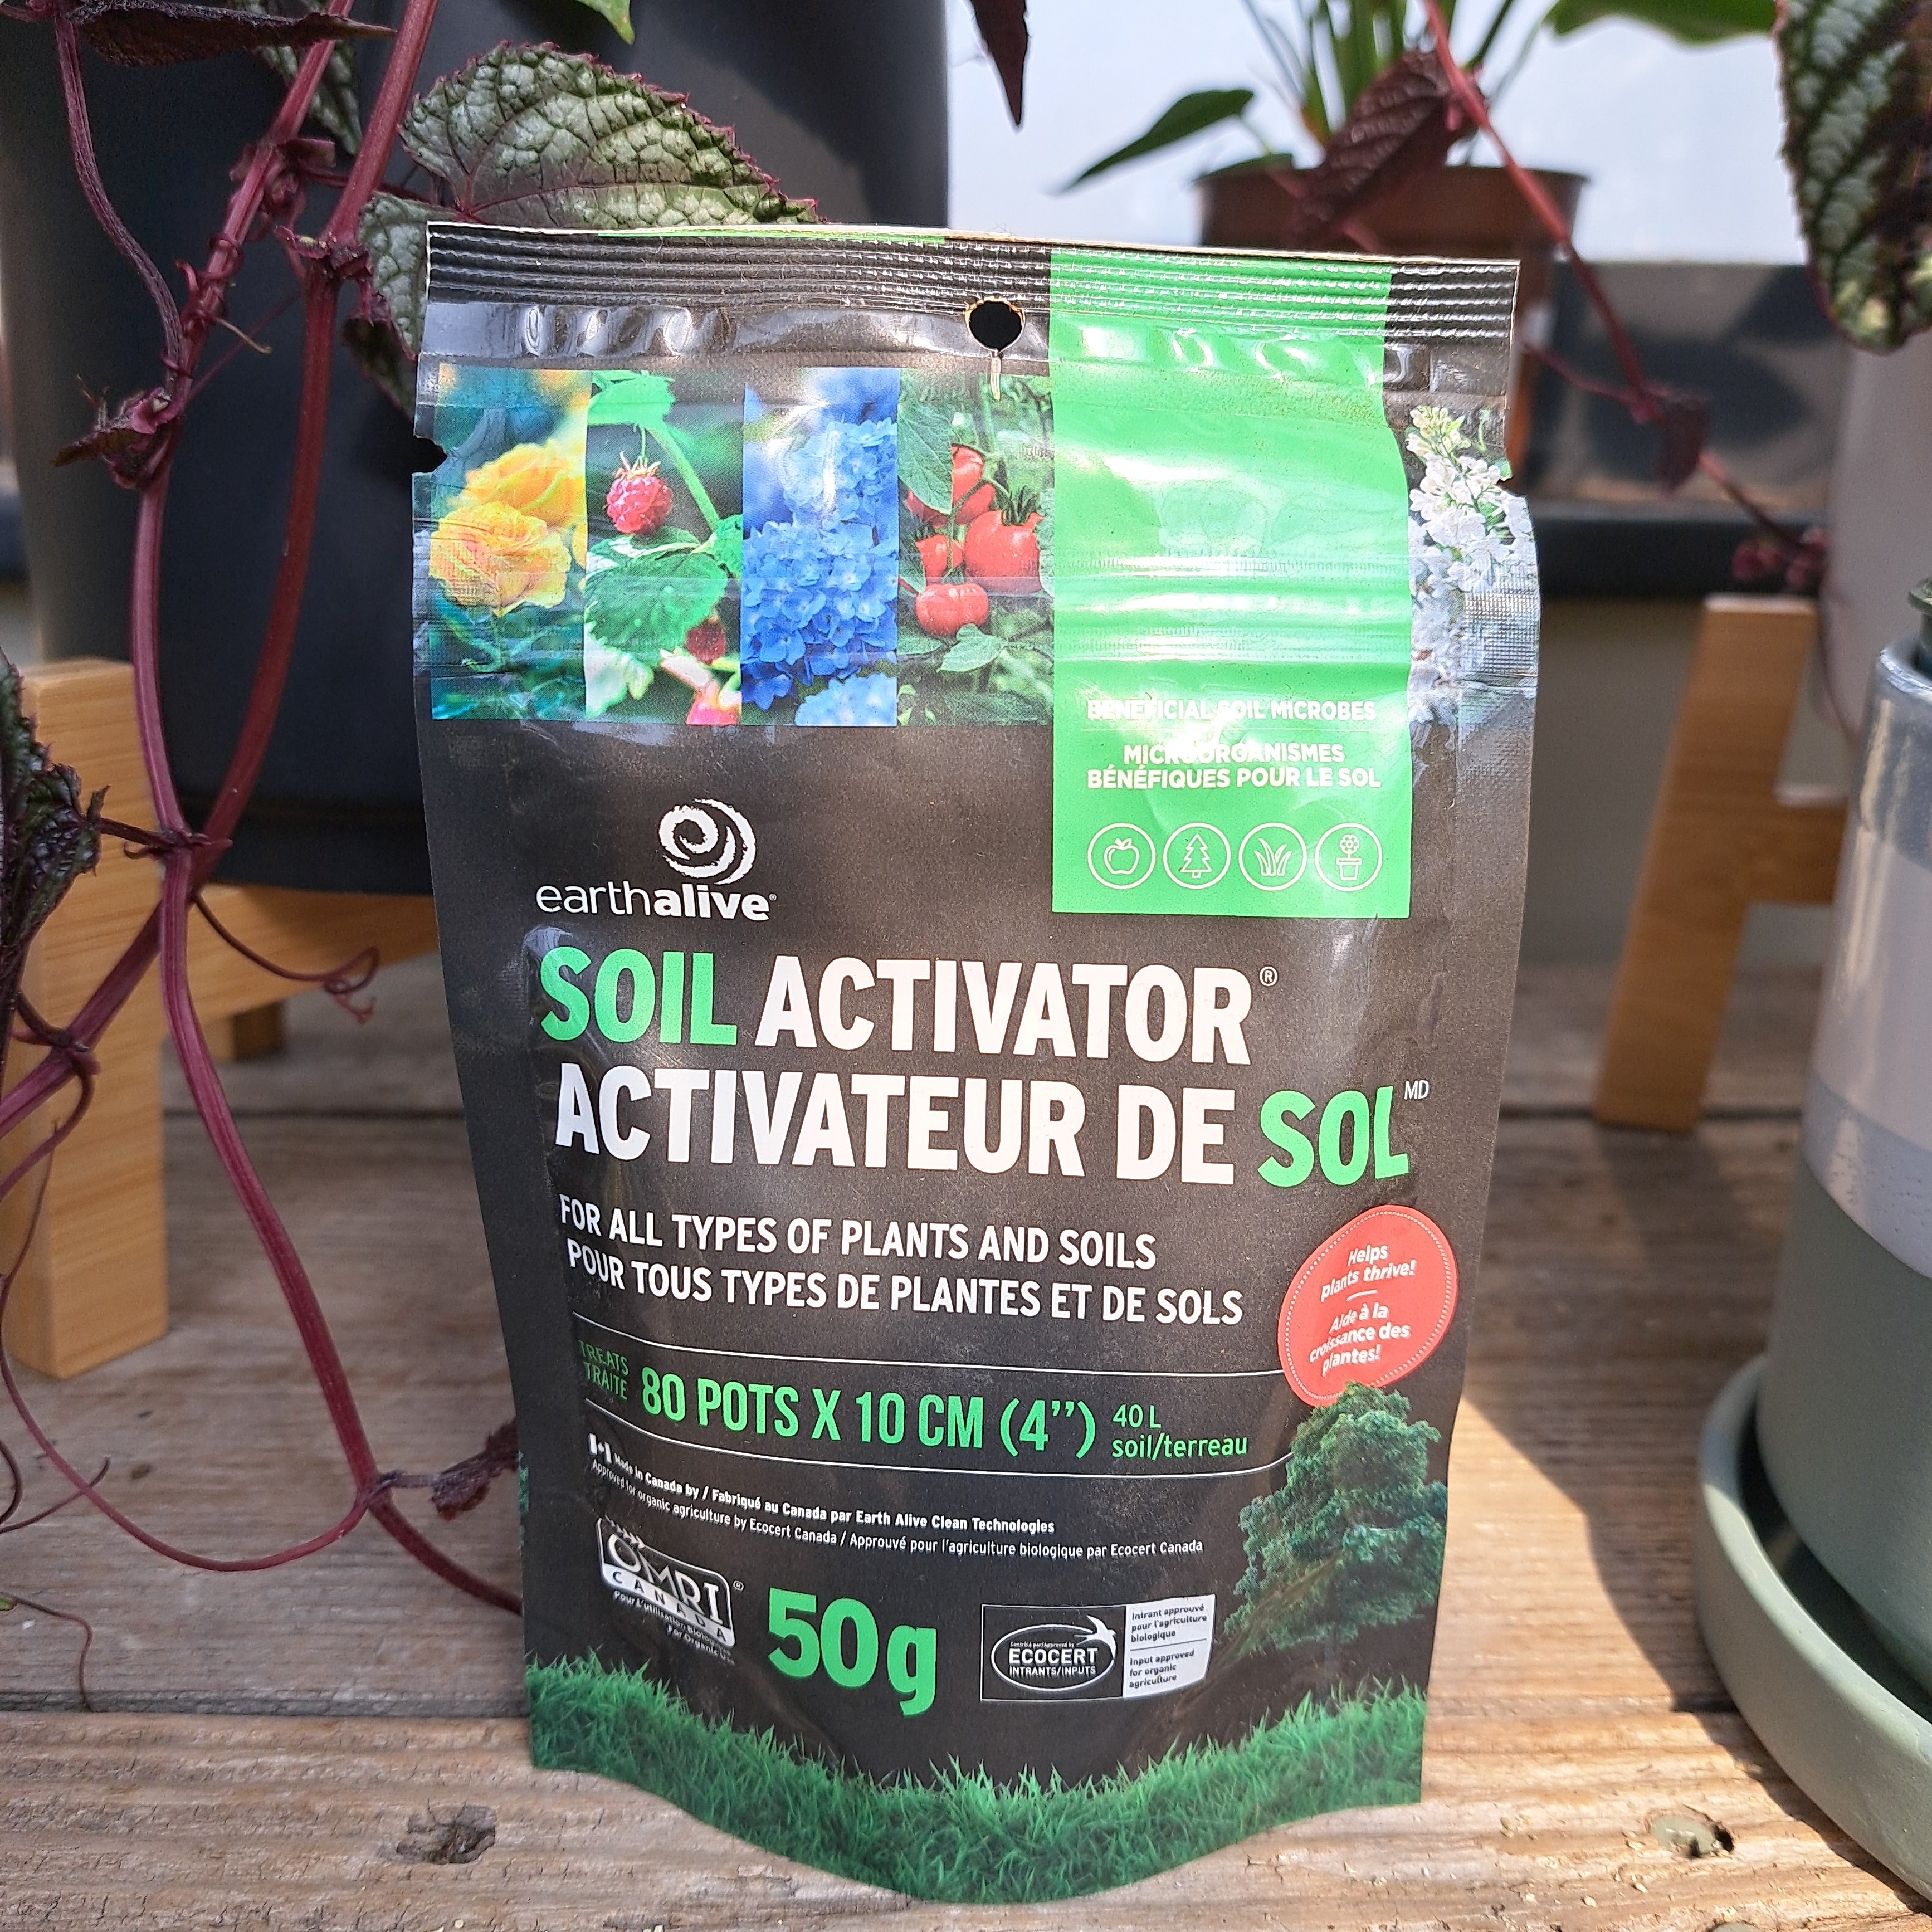 Earthalive soil activator